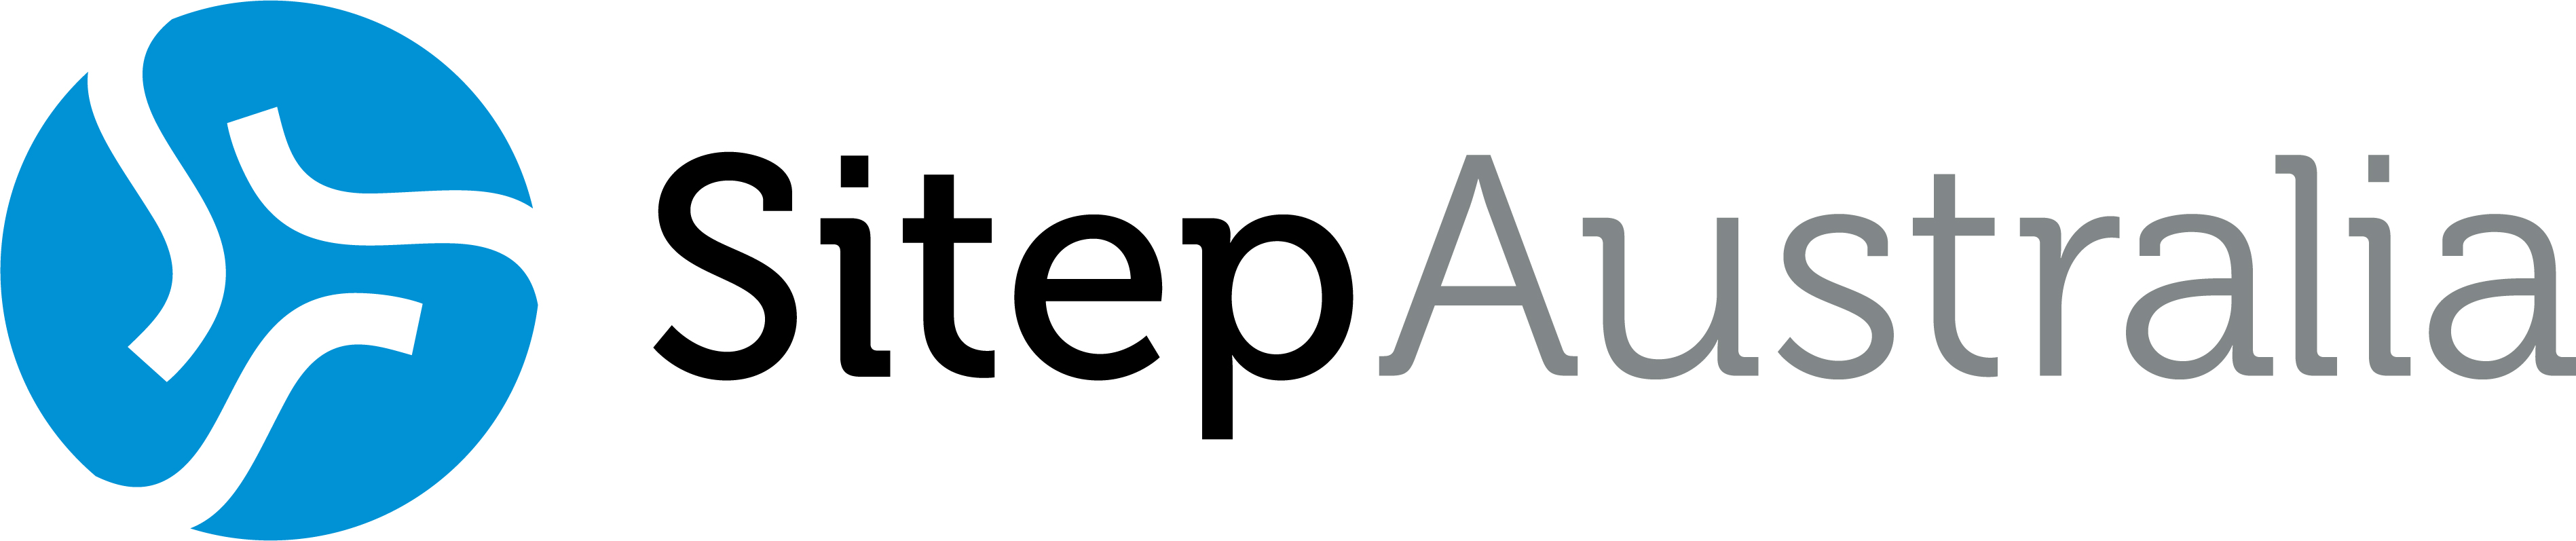 Sitep Australia logo